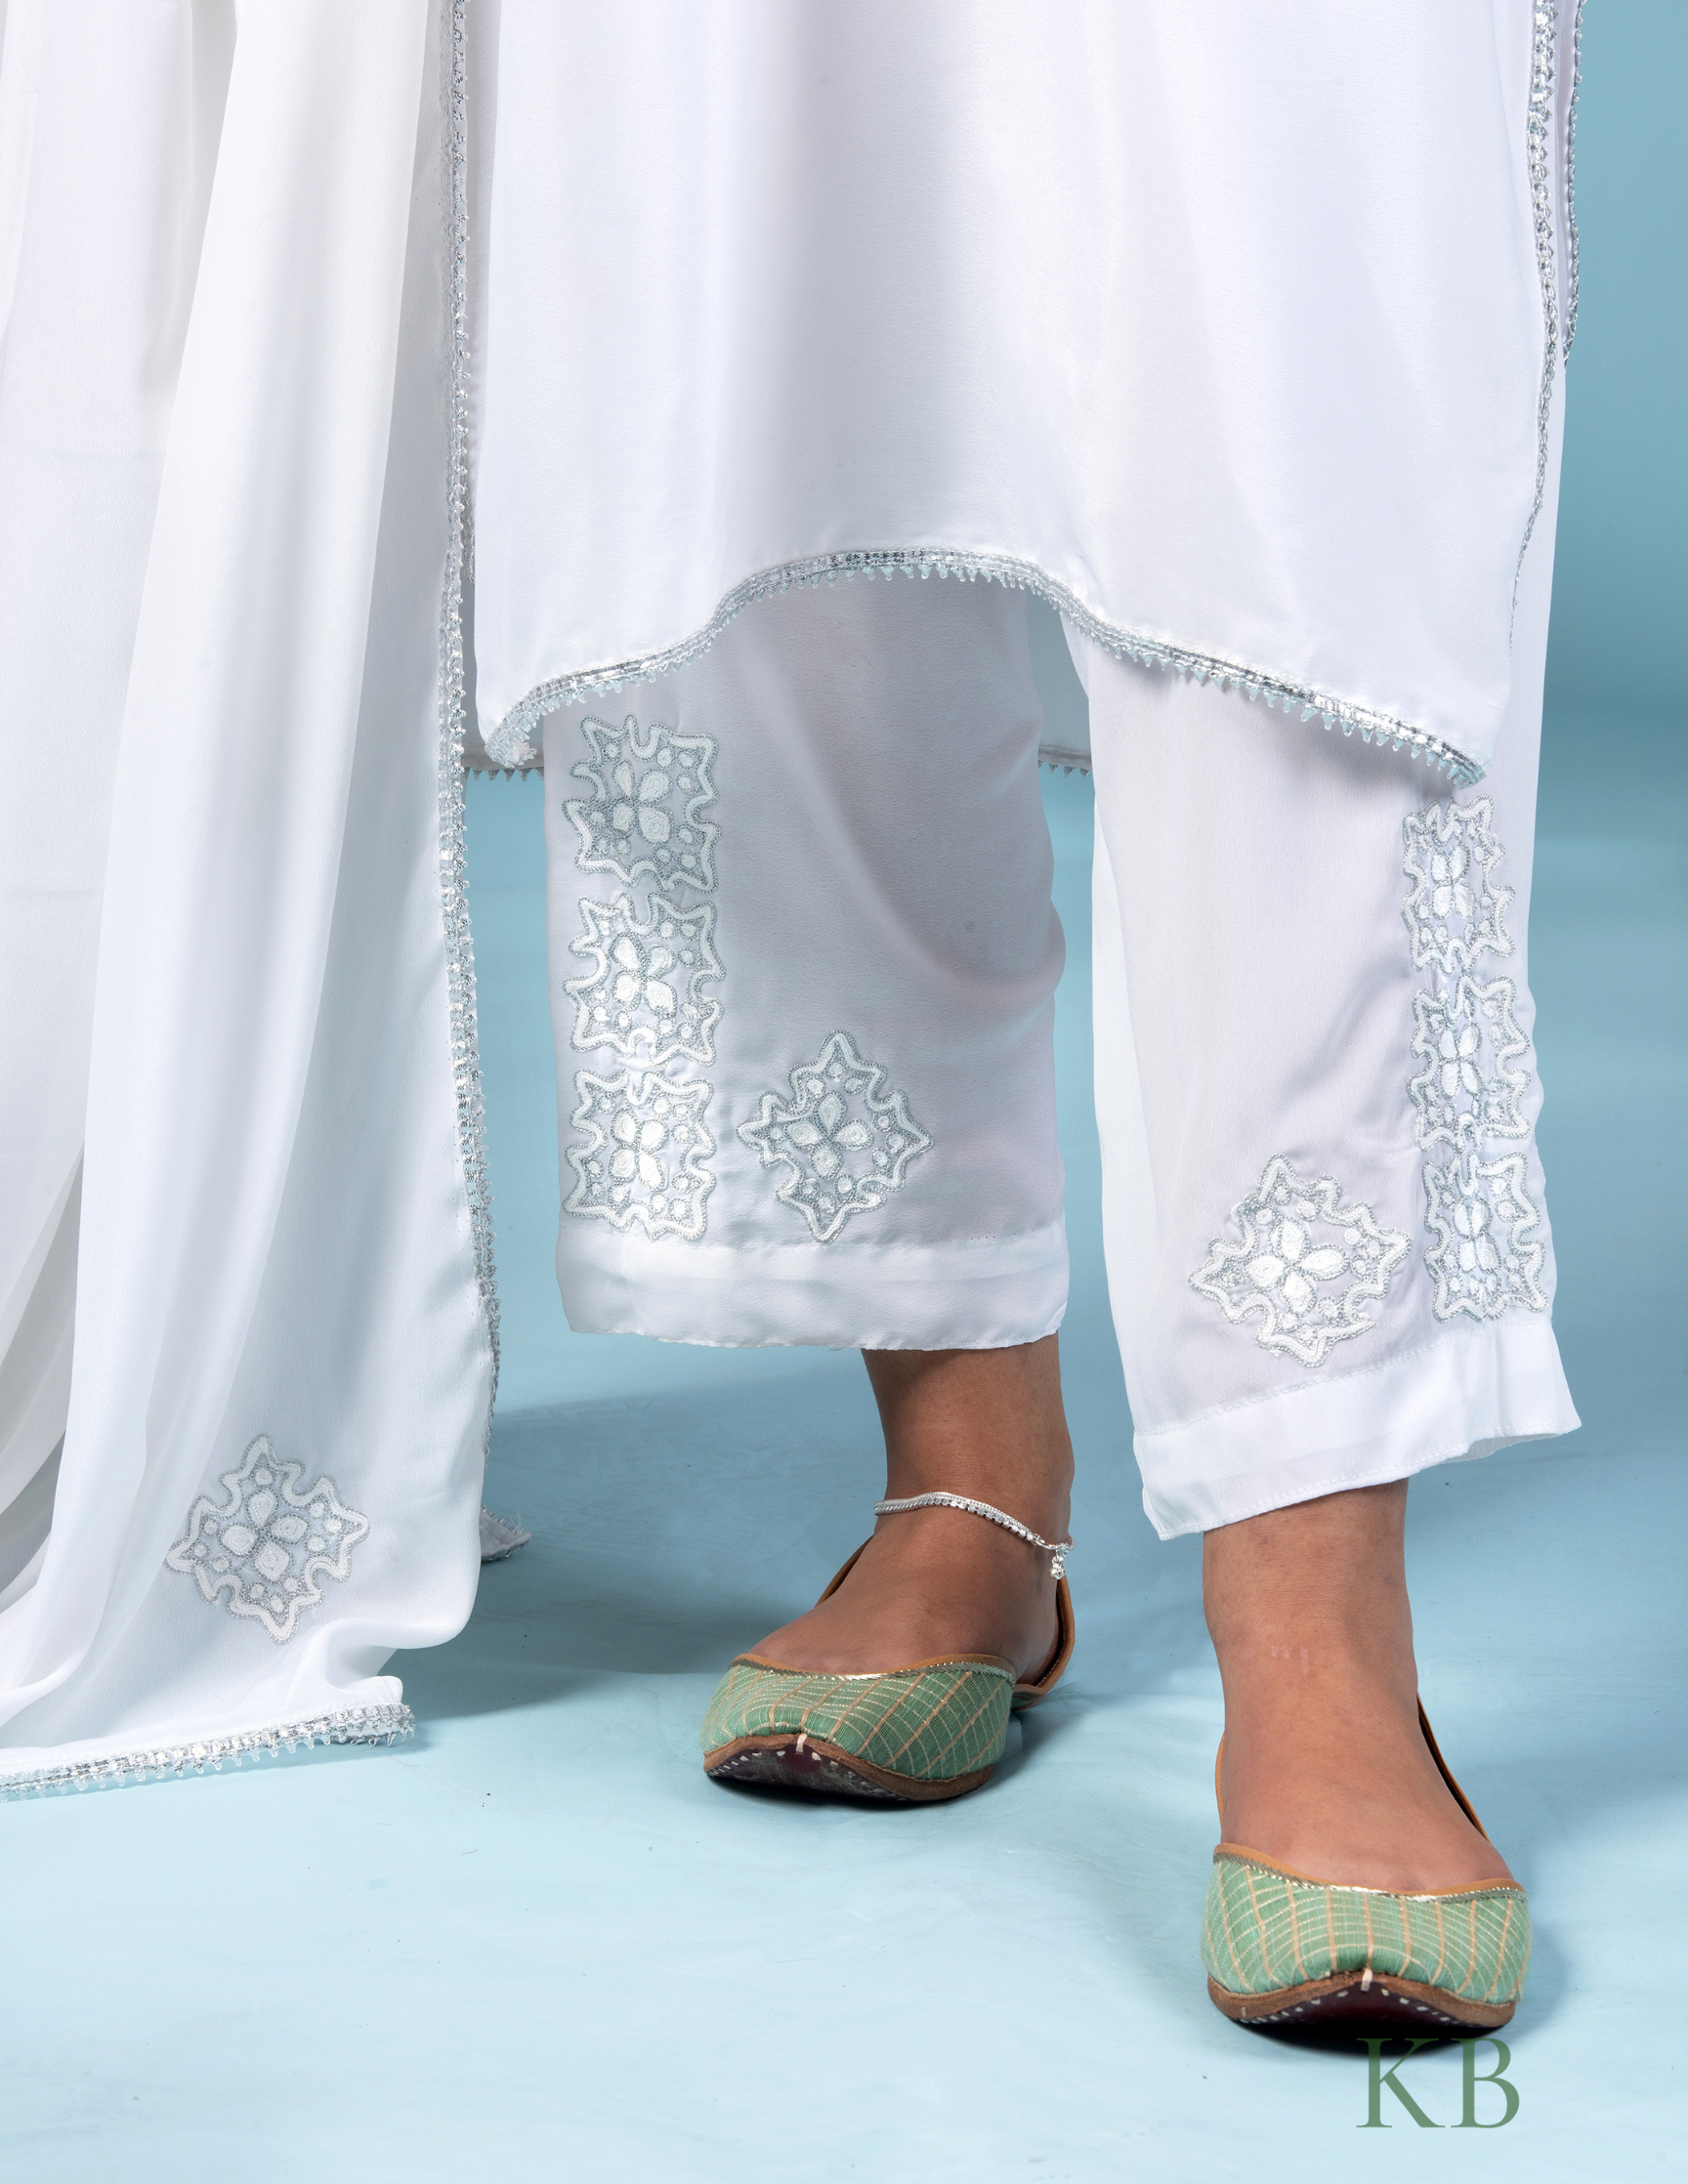 Zehra Aari-Zari Embroidered White Crepe Suit with 2.5 Meters Dupatta - Kashmir Box